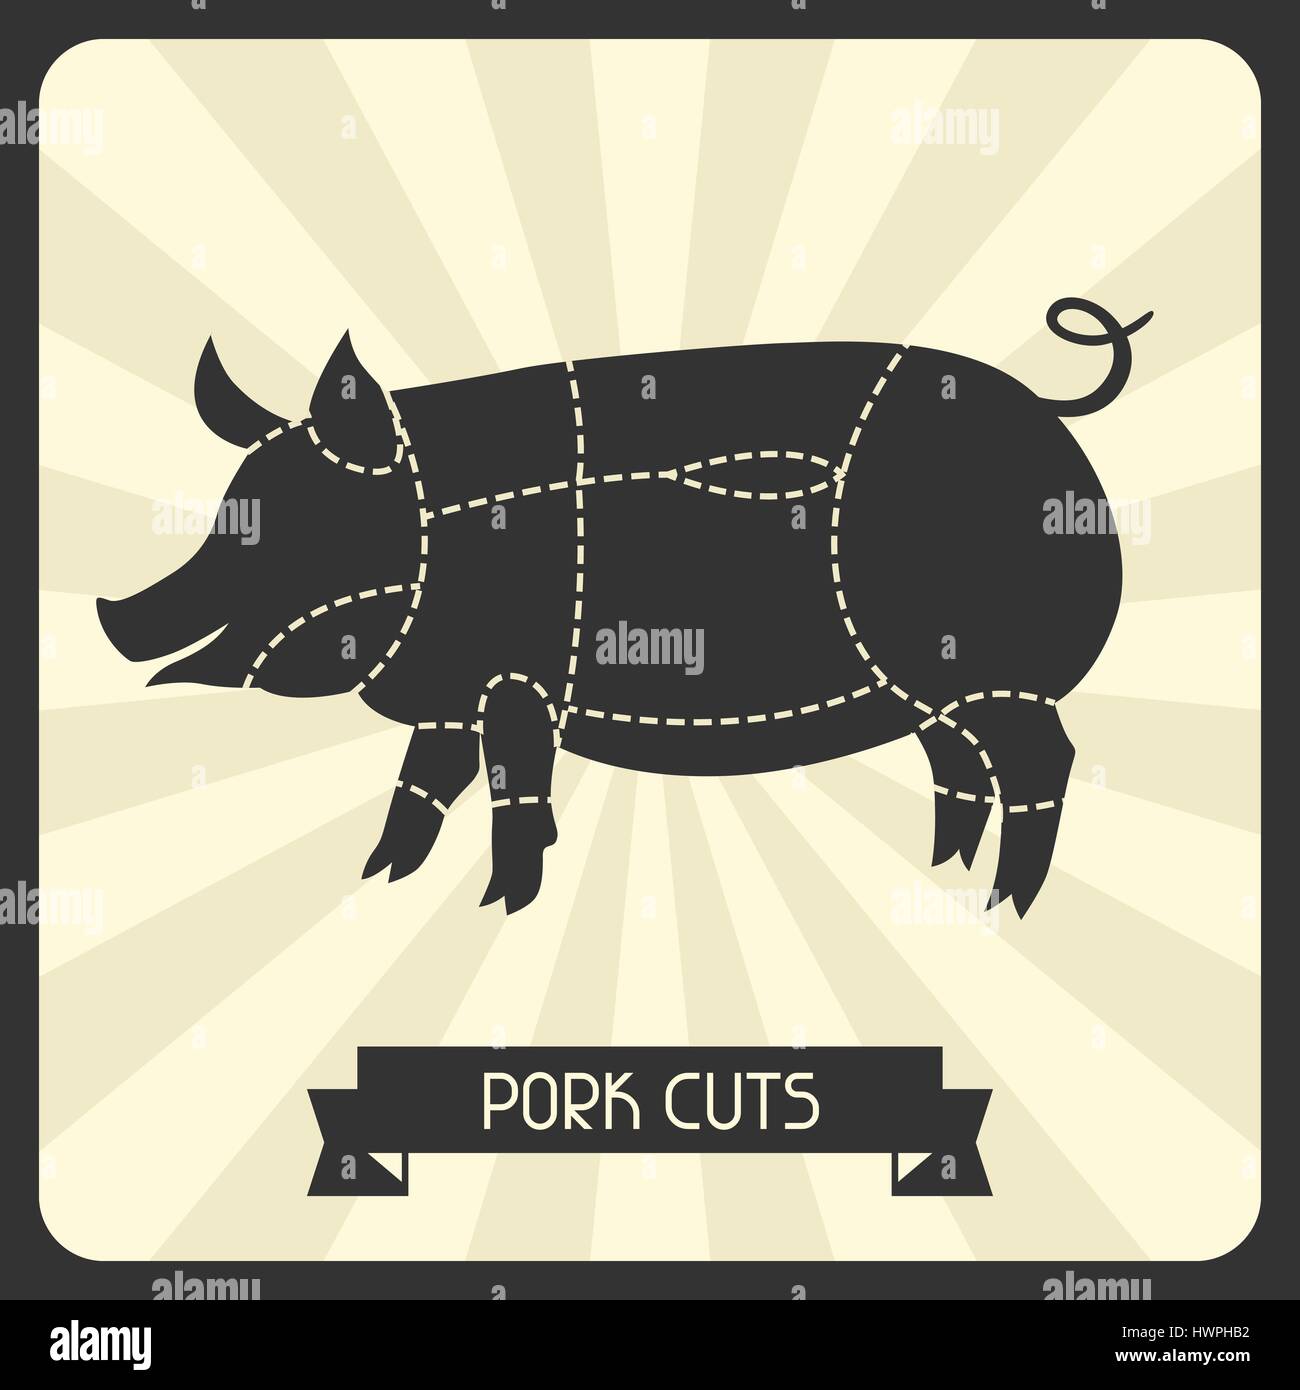 Pork cuts. Butchers cheme cutting meat illustration Stock Vector